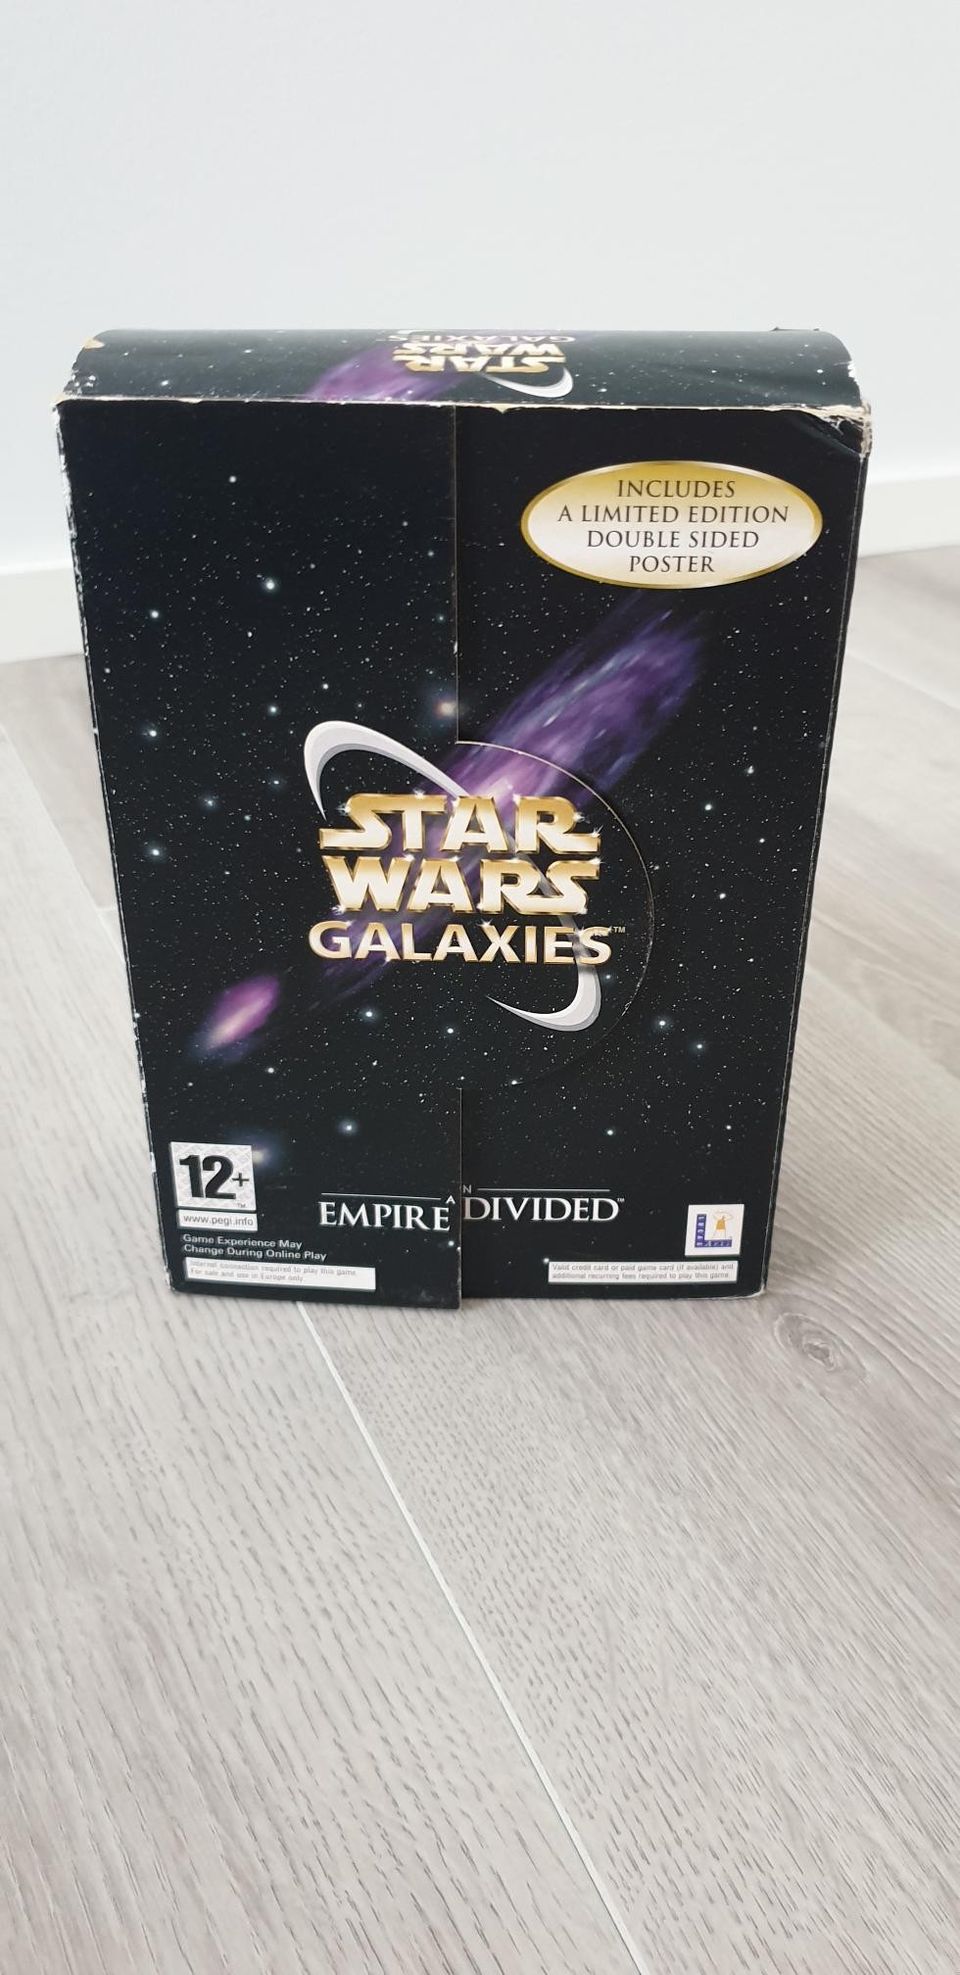 Star Wars Galaxies - Empire Divided